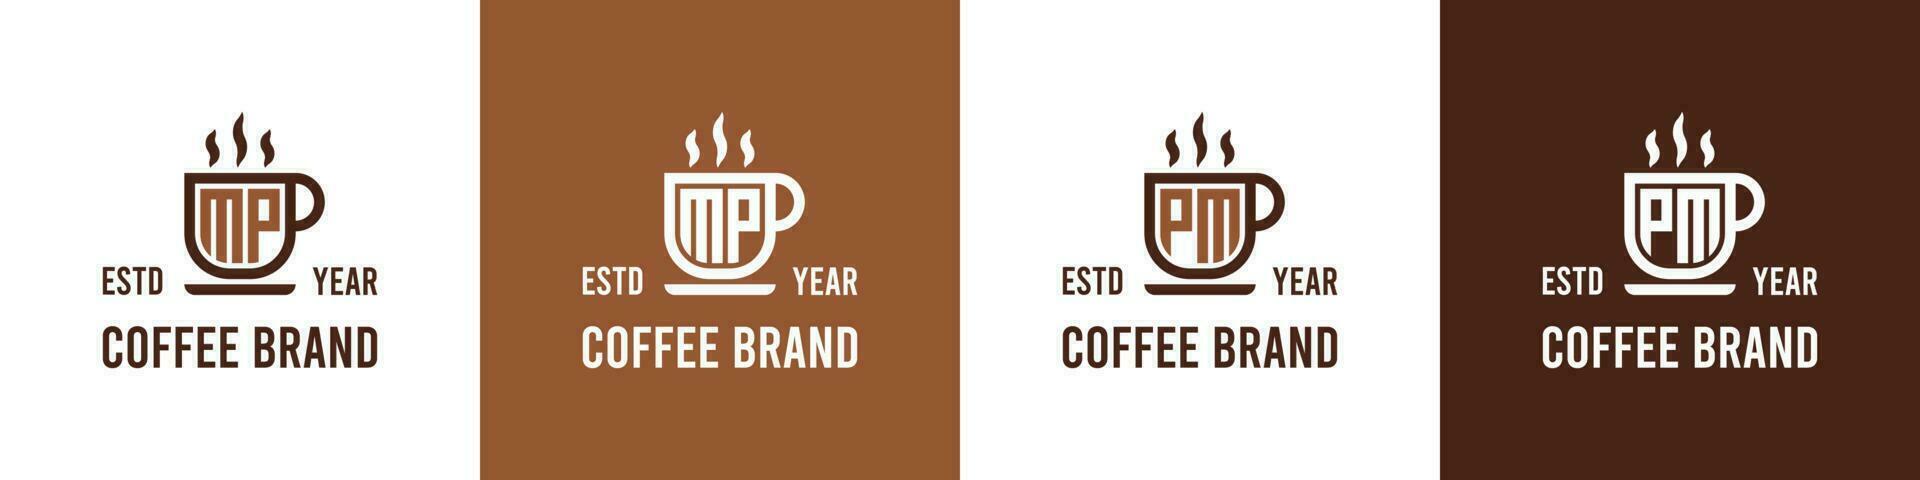 letra mp y pm café logo, adecuado para ninguna negocio relacionado a café, té, o otro con mp o pm iniciales. vector